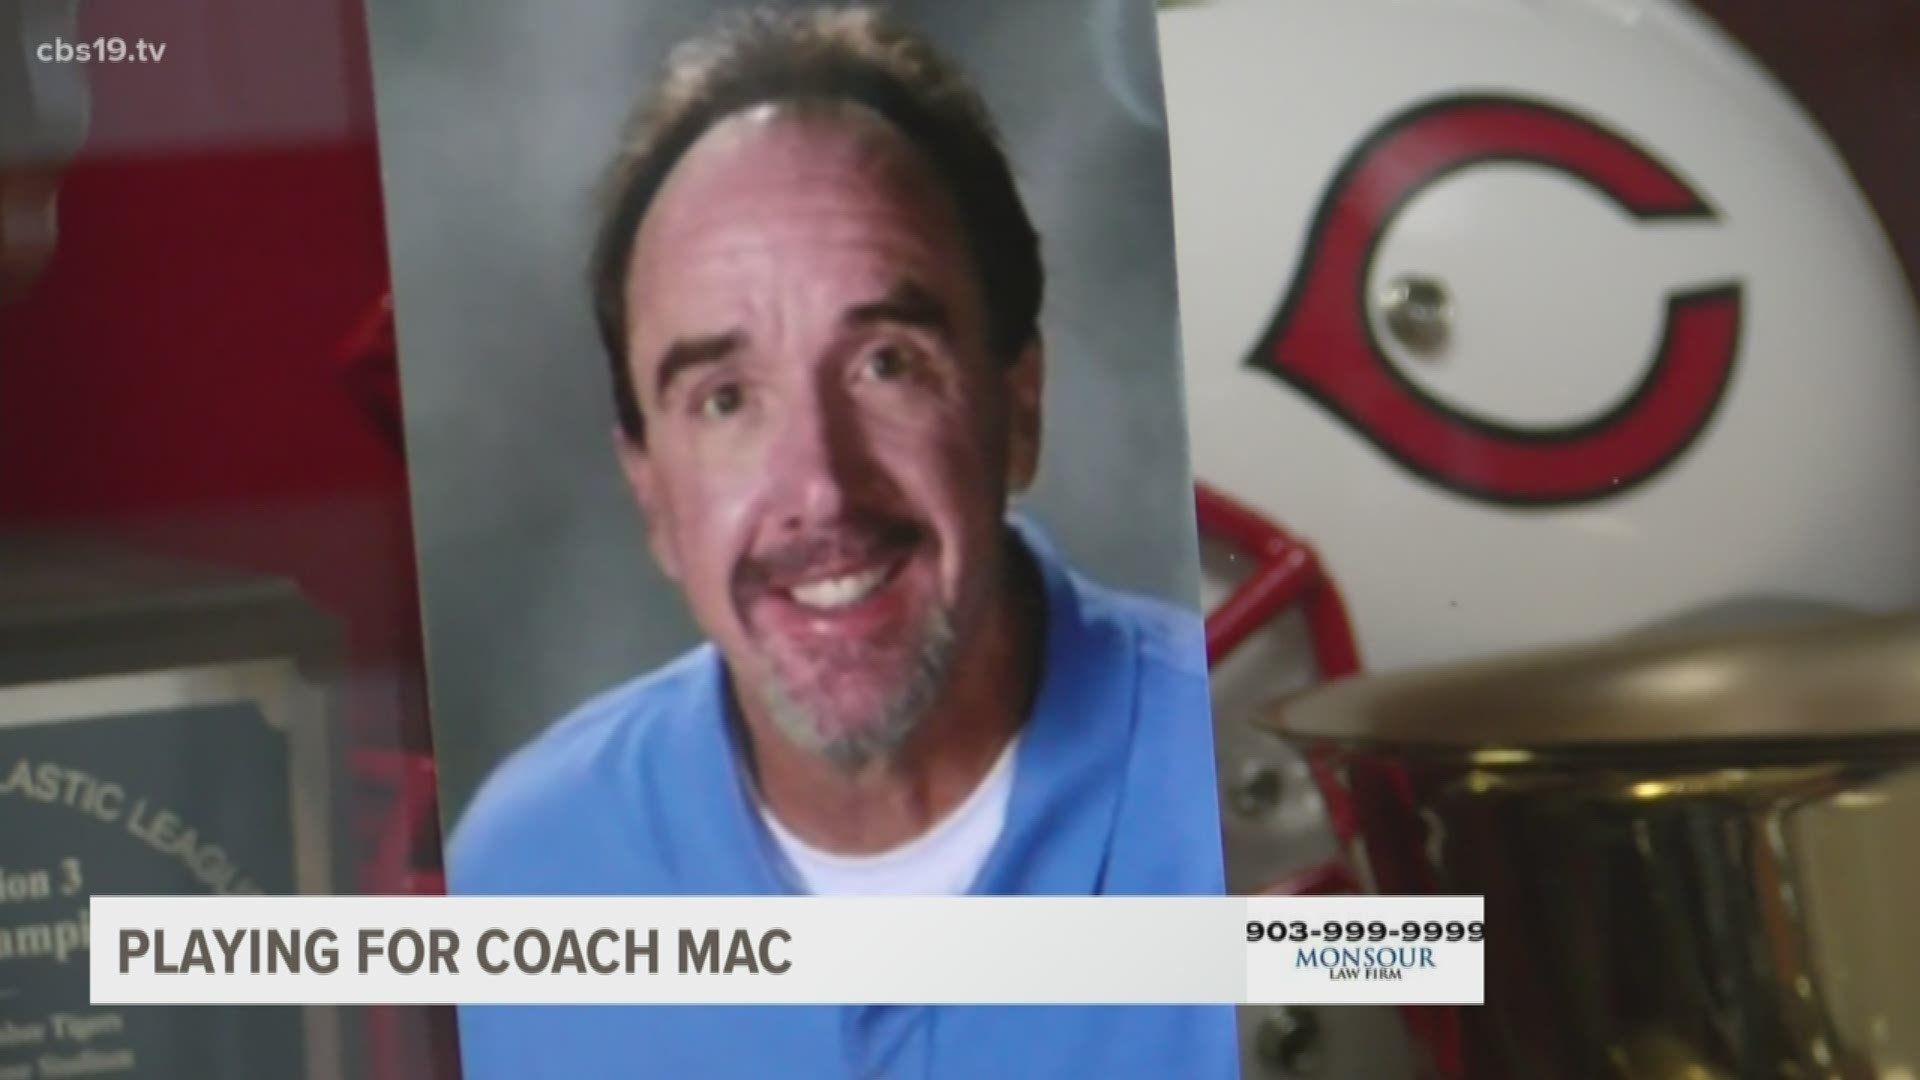 "We're playing for Coach Mac, and I'm coaching for Coach Mac."